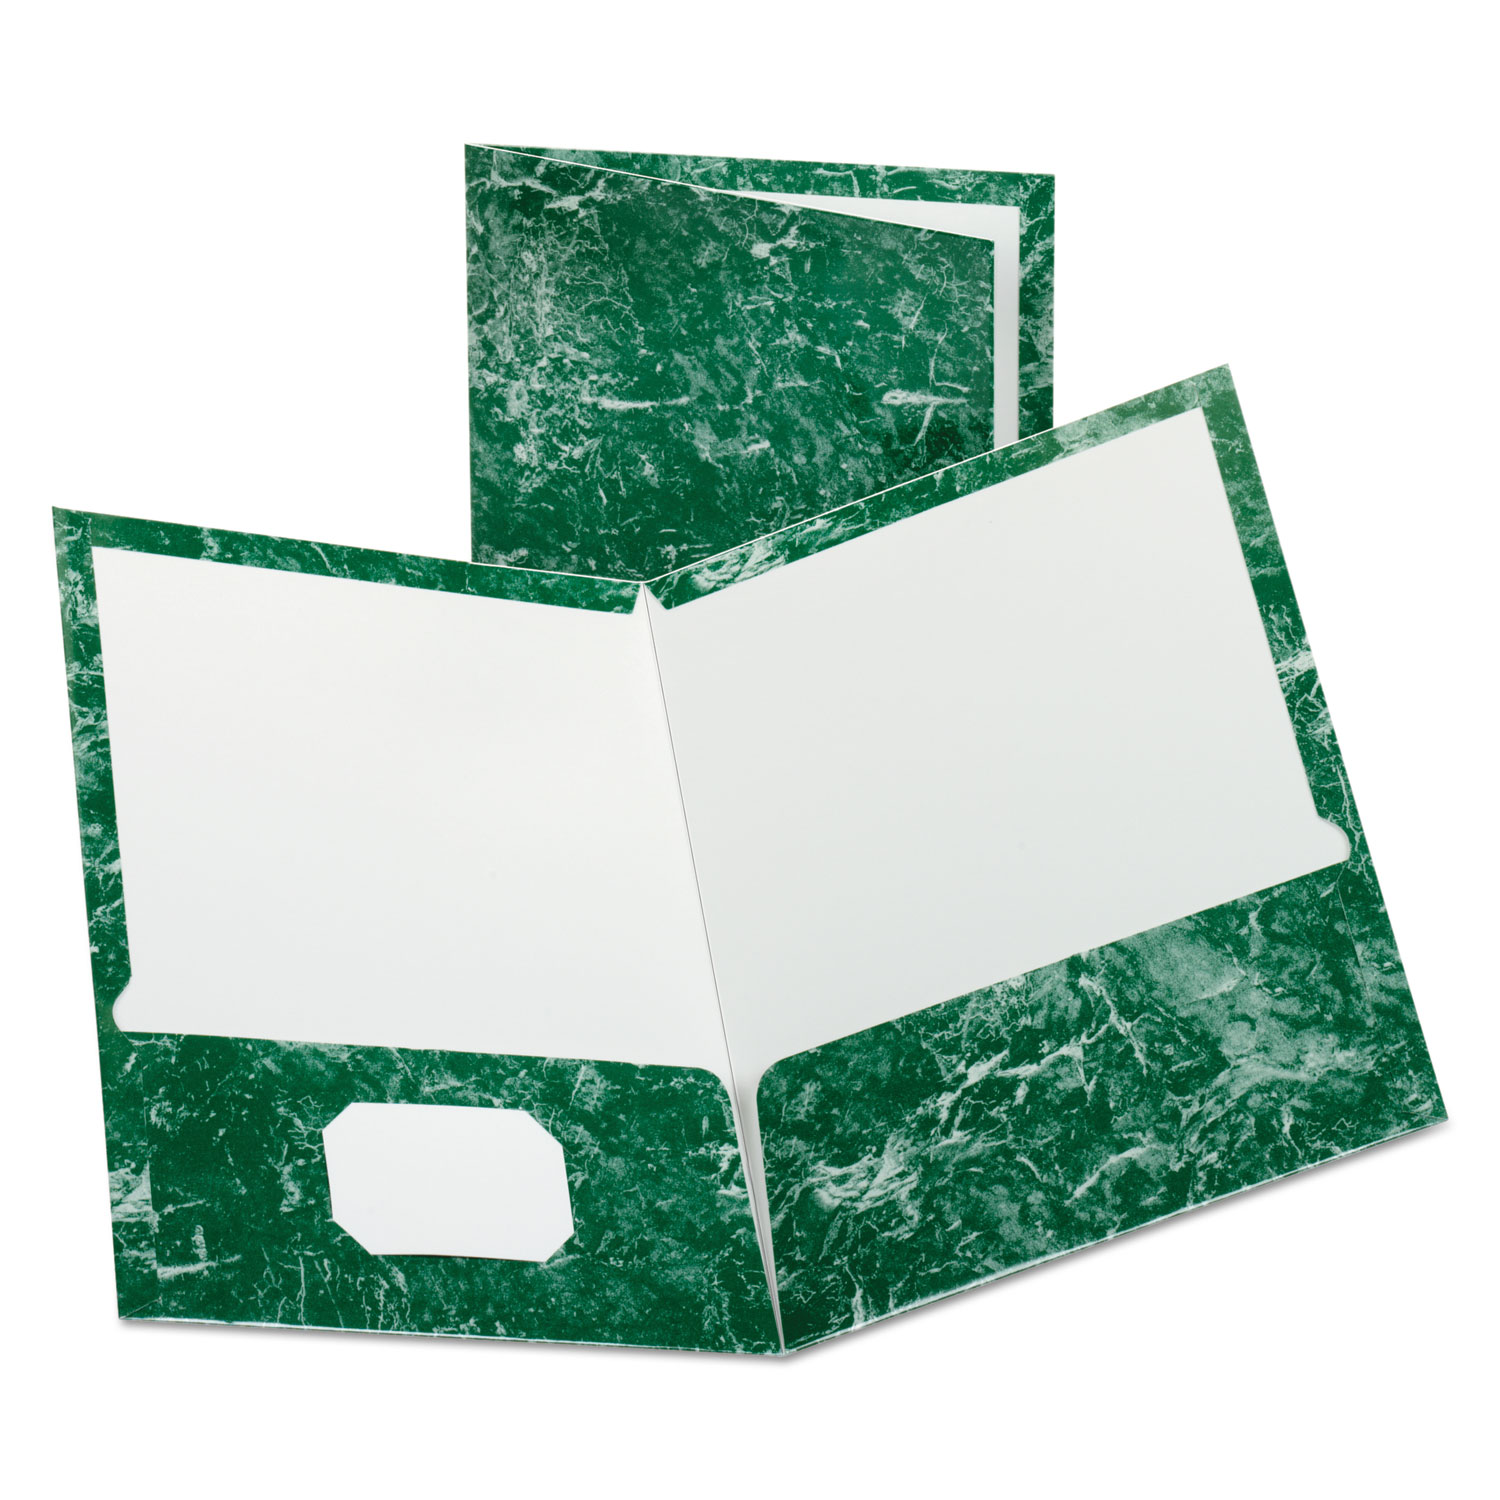  Oxford 51617 Marble Design Laminated High Gloss Twin Pocket Folder, Emerald Green, 25/box (OXF51617) 